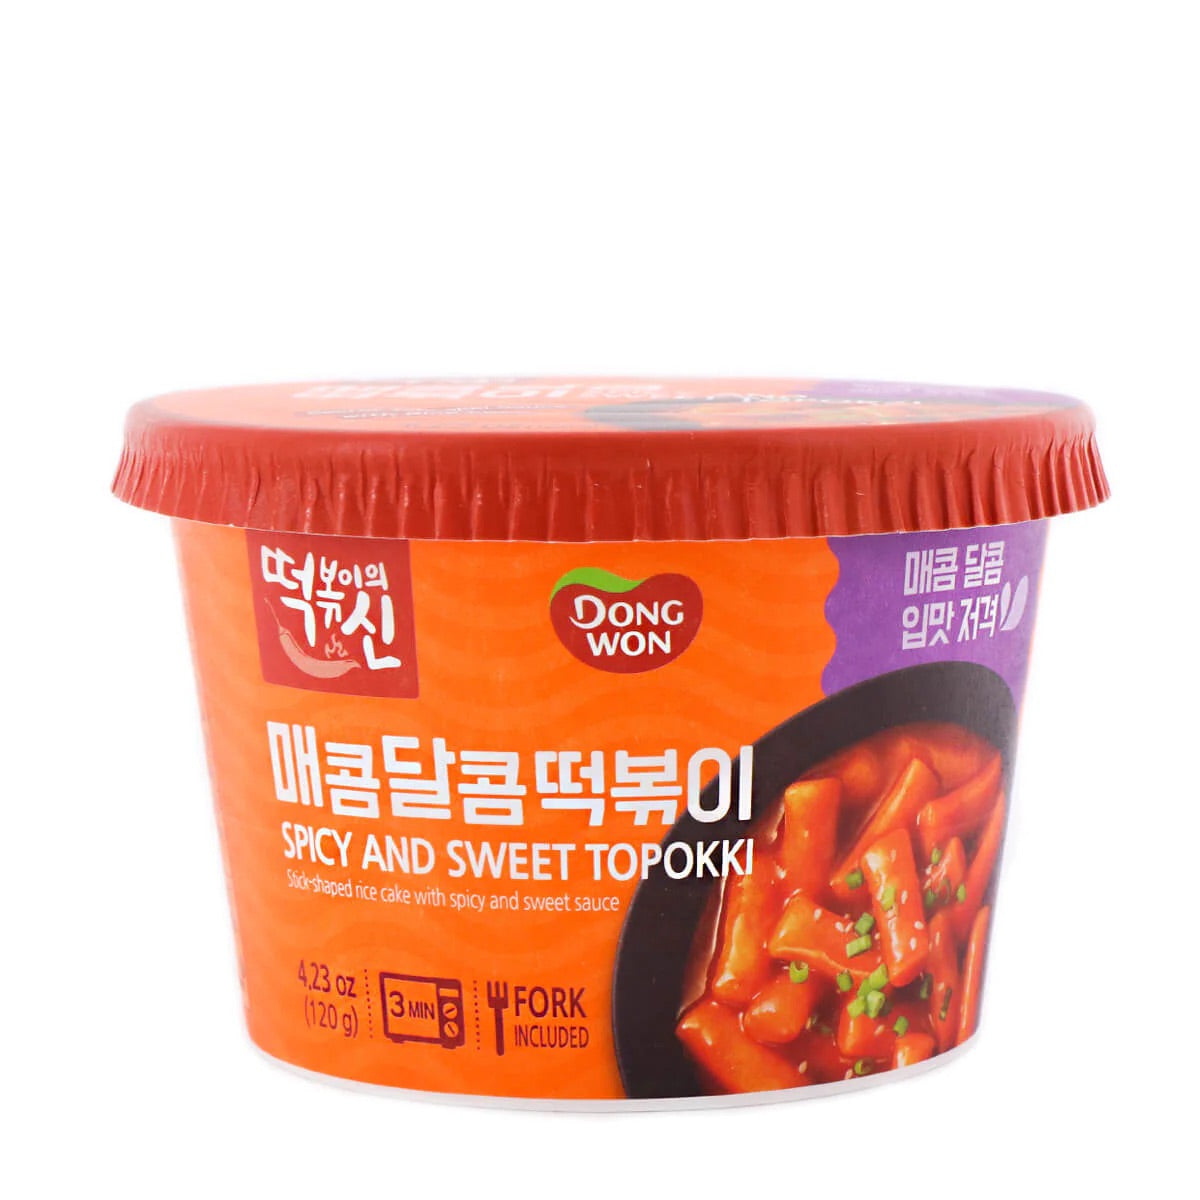 Dong Won - Spicy and Sweet Topokki Bowl - 4.23oz/120g